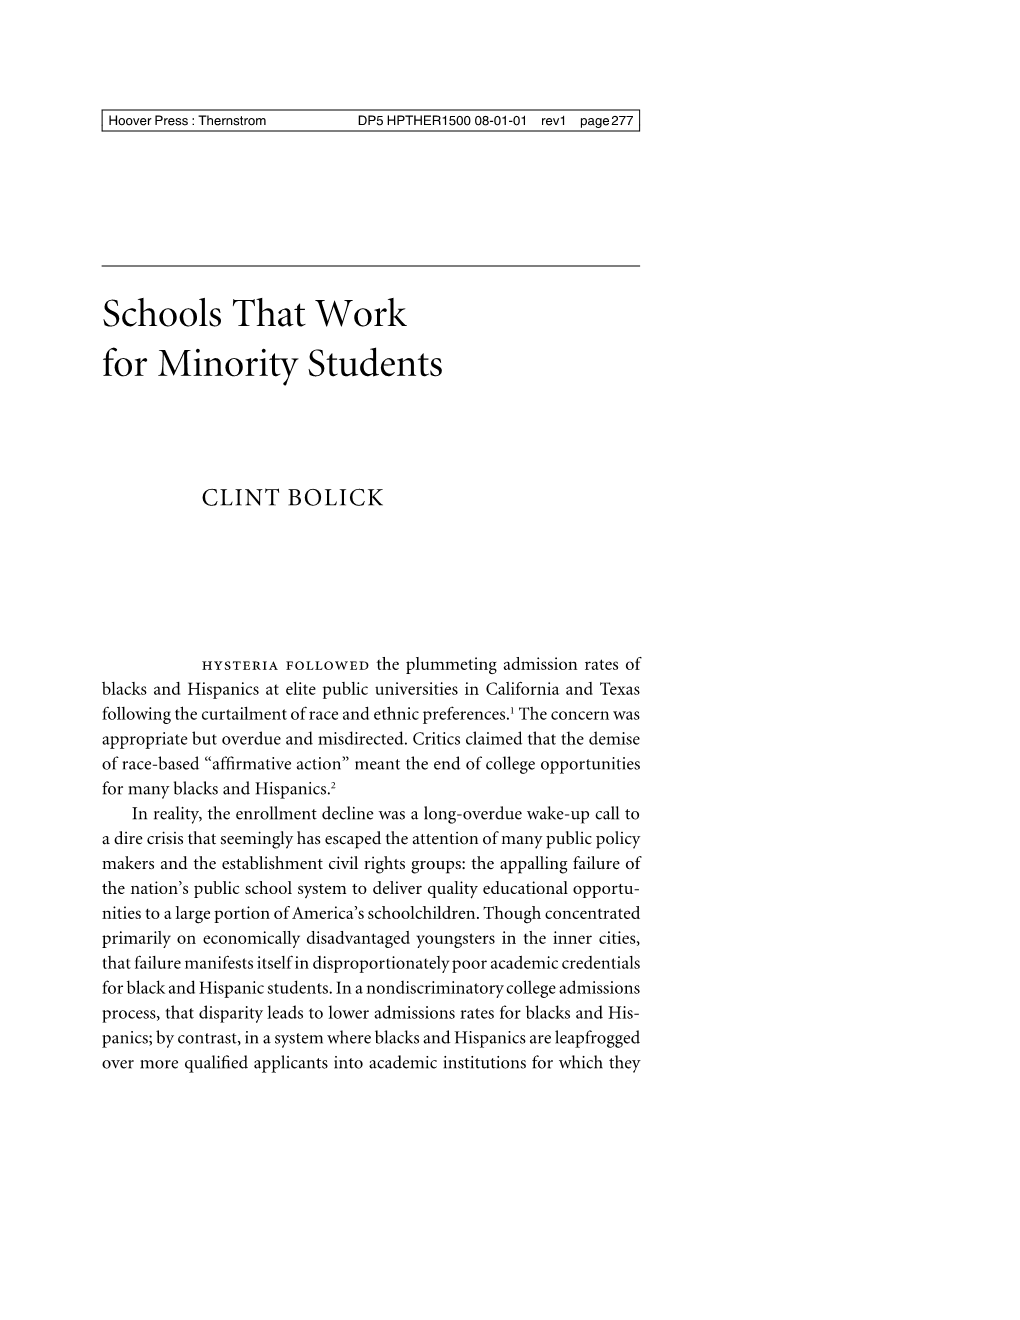 Schools That Work for Minority Students